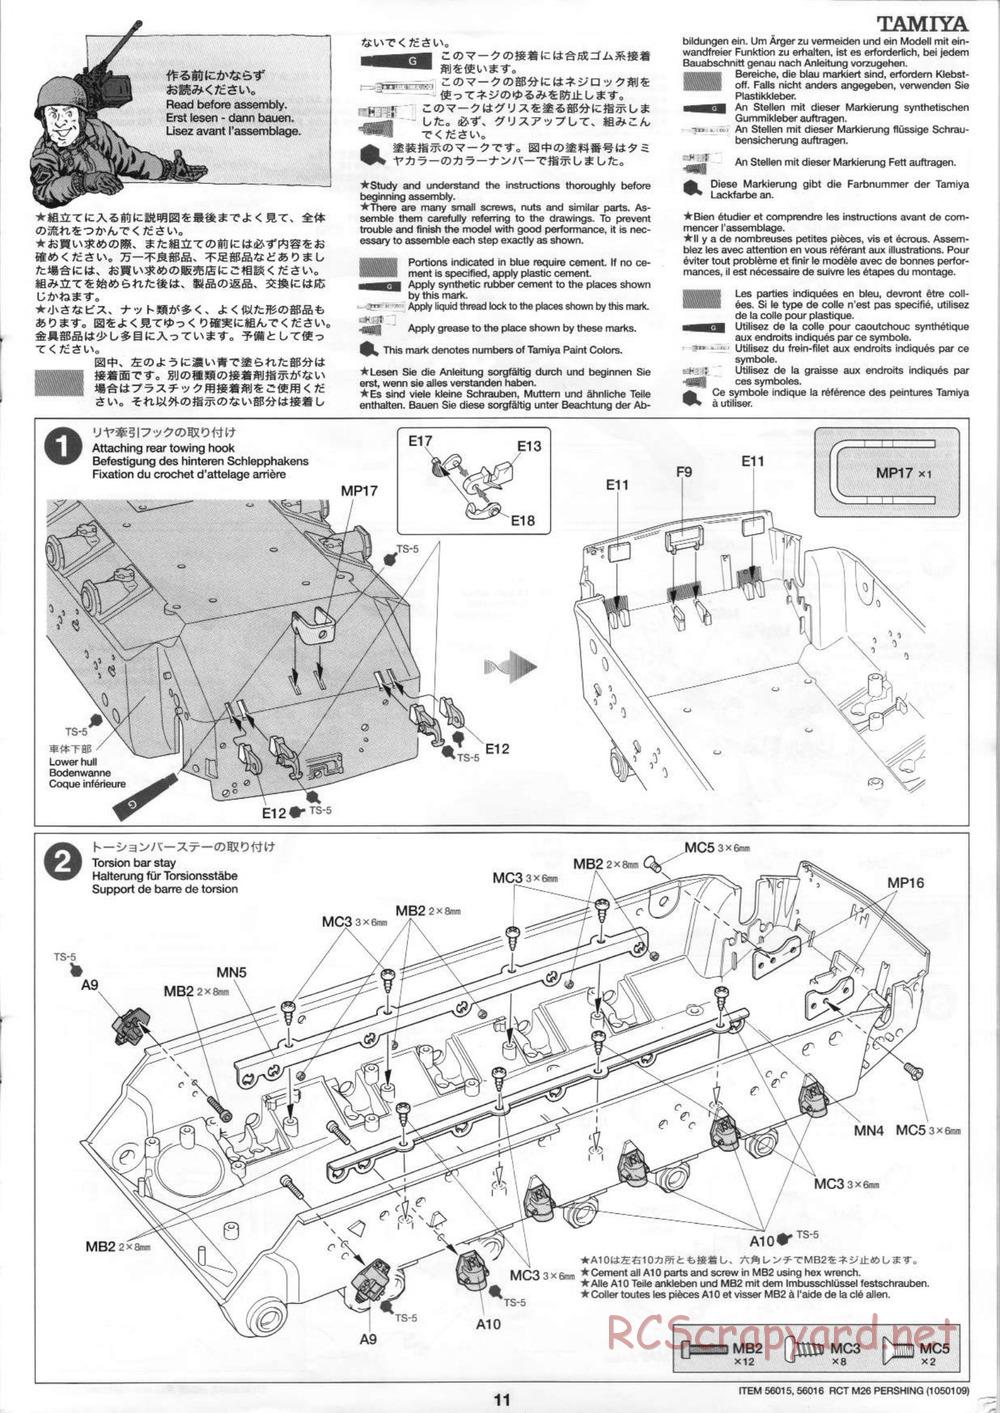 Tamiya - M26 Pershing - 1/16 Scale Chassis - Manual - Page 11